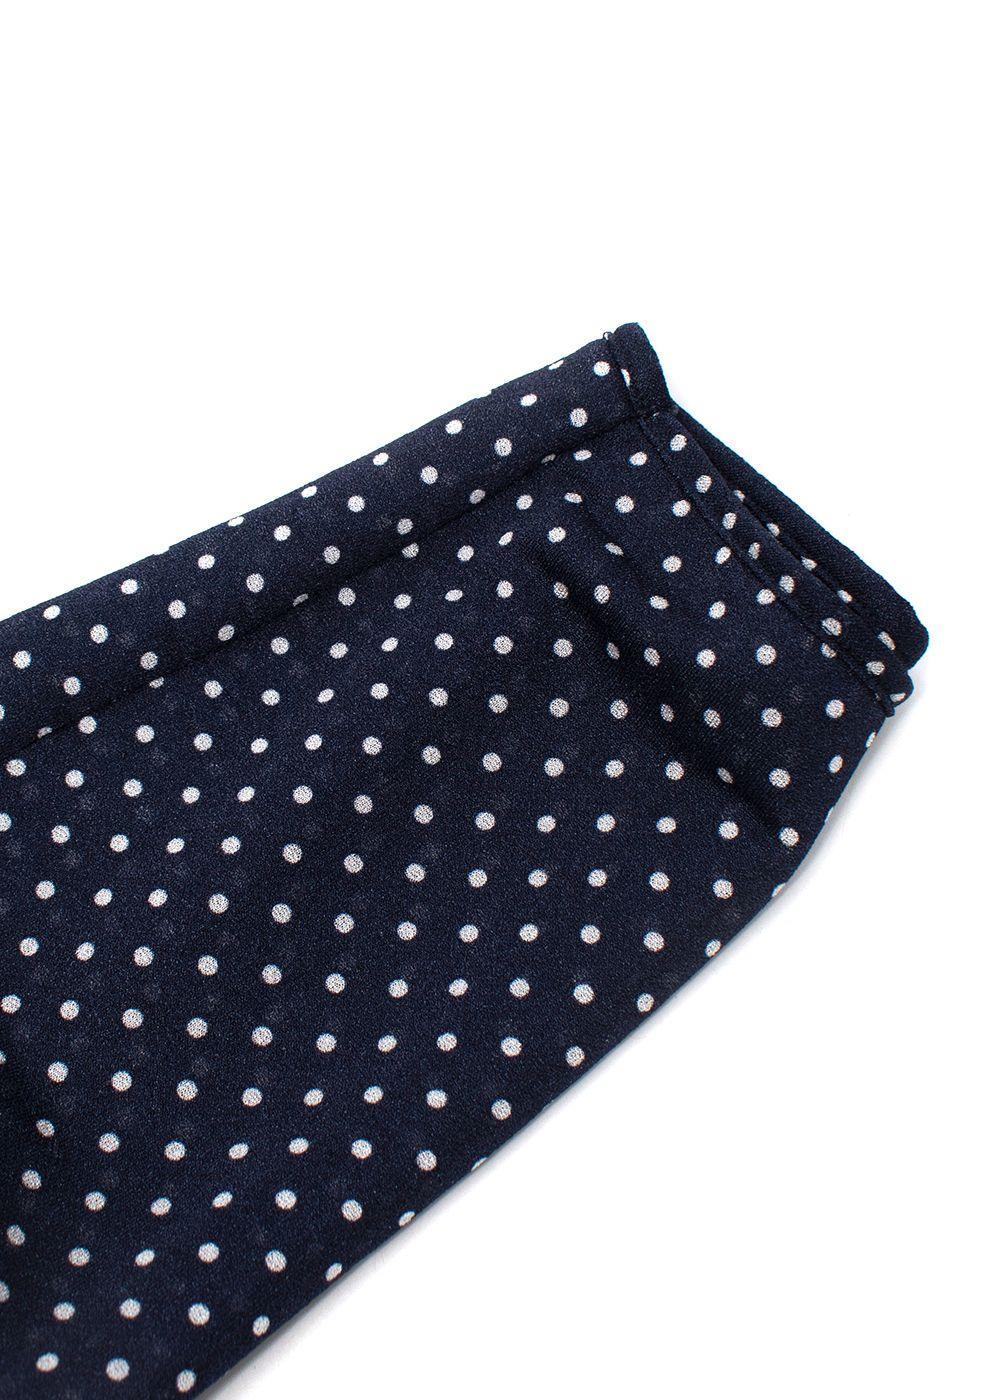 Vetements Navy Polka Dot Multi Fabric Wrap Dress - US 8 For Sale 1